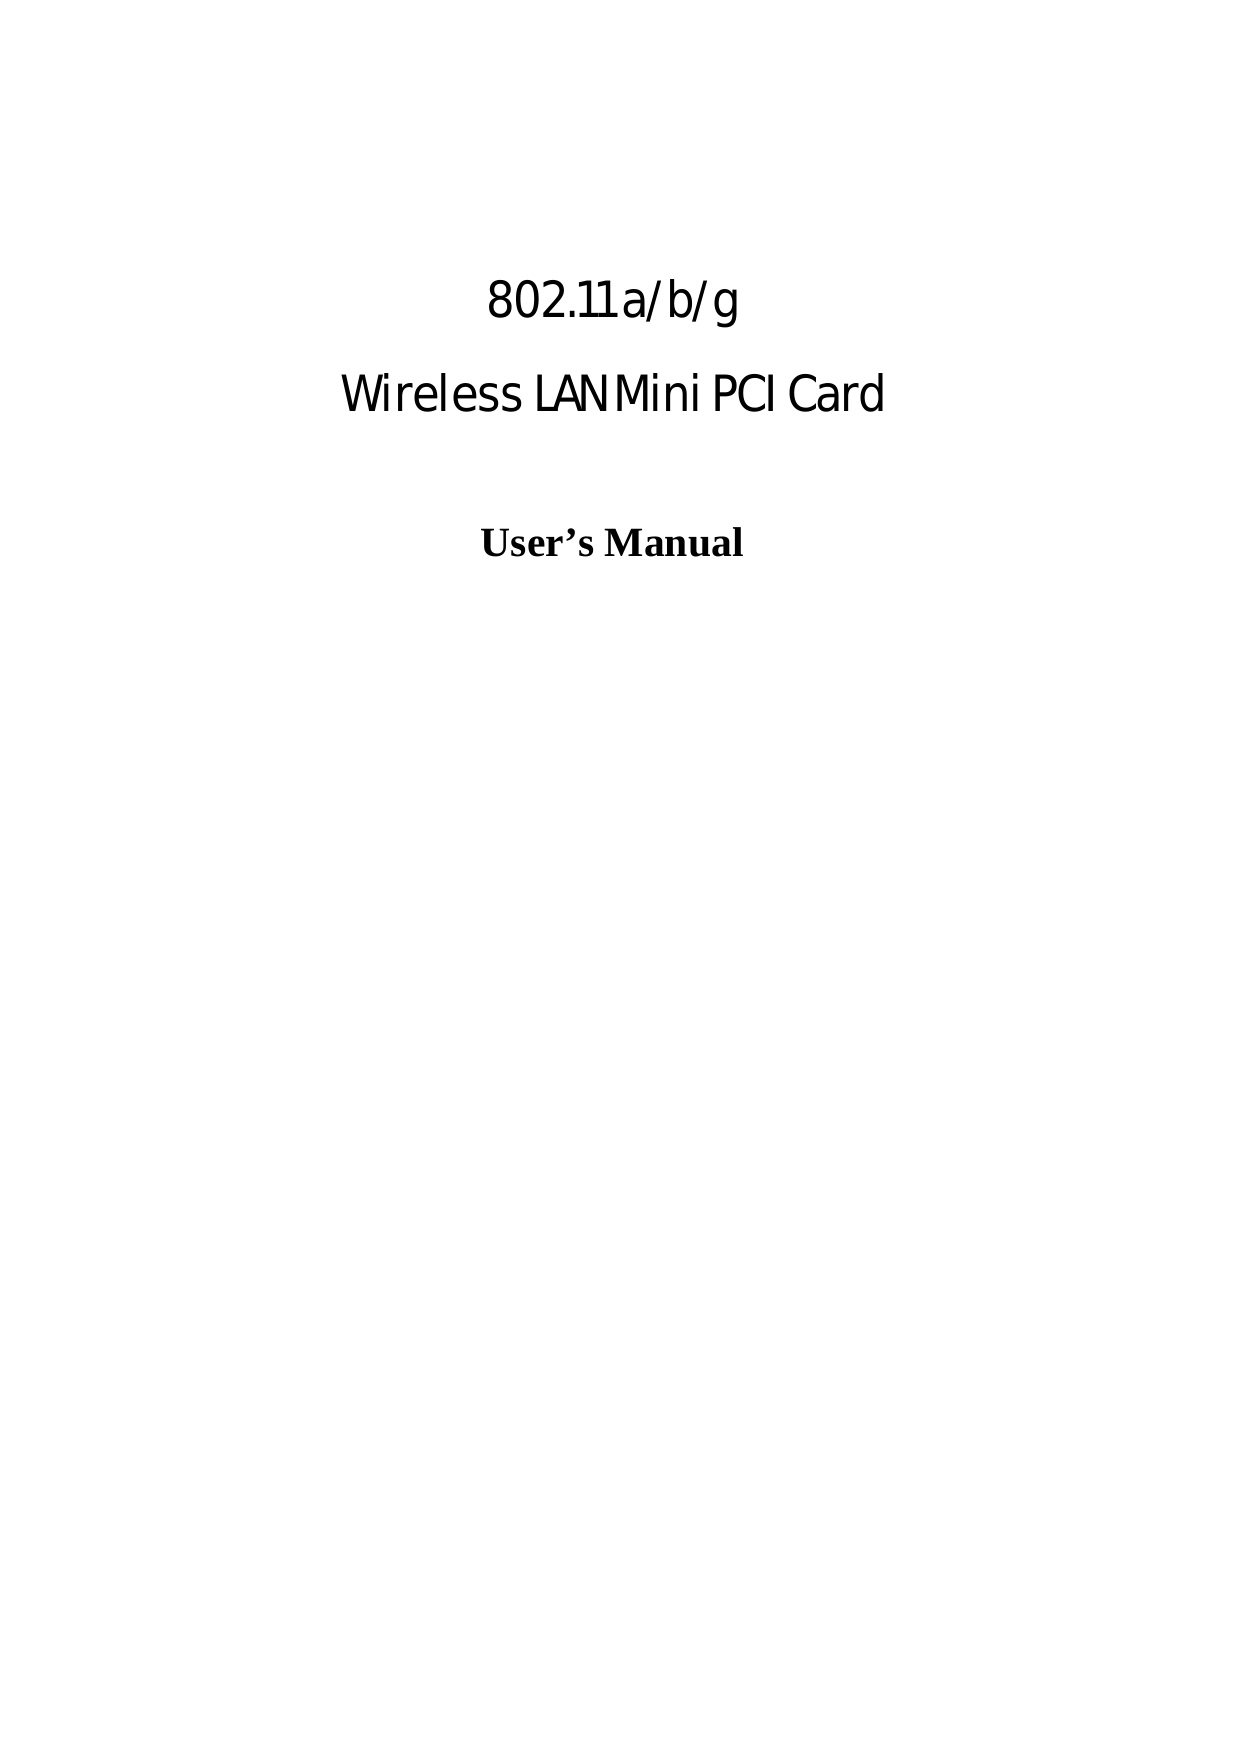     802.11 a/b/g   Wireless LAN Mini PCI Card  User’s Manual 